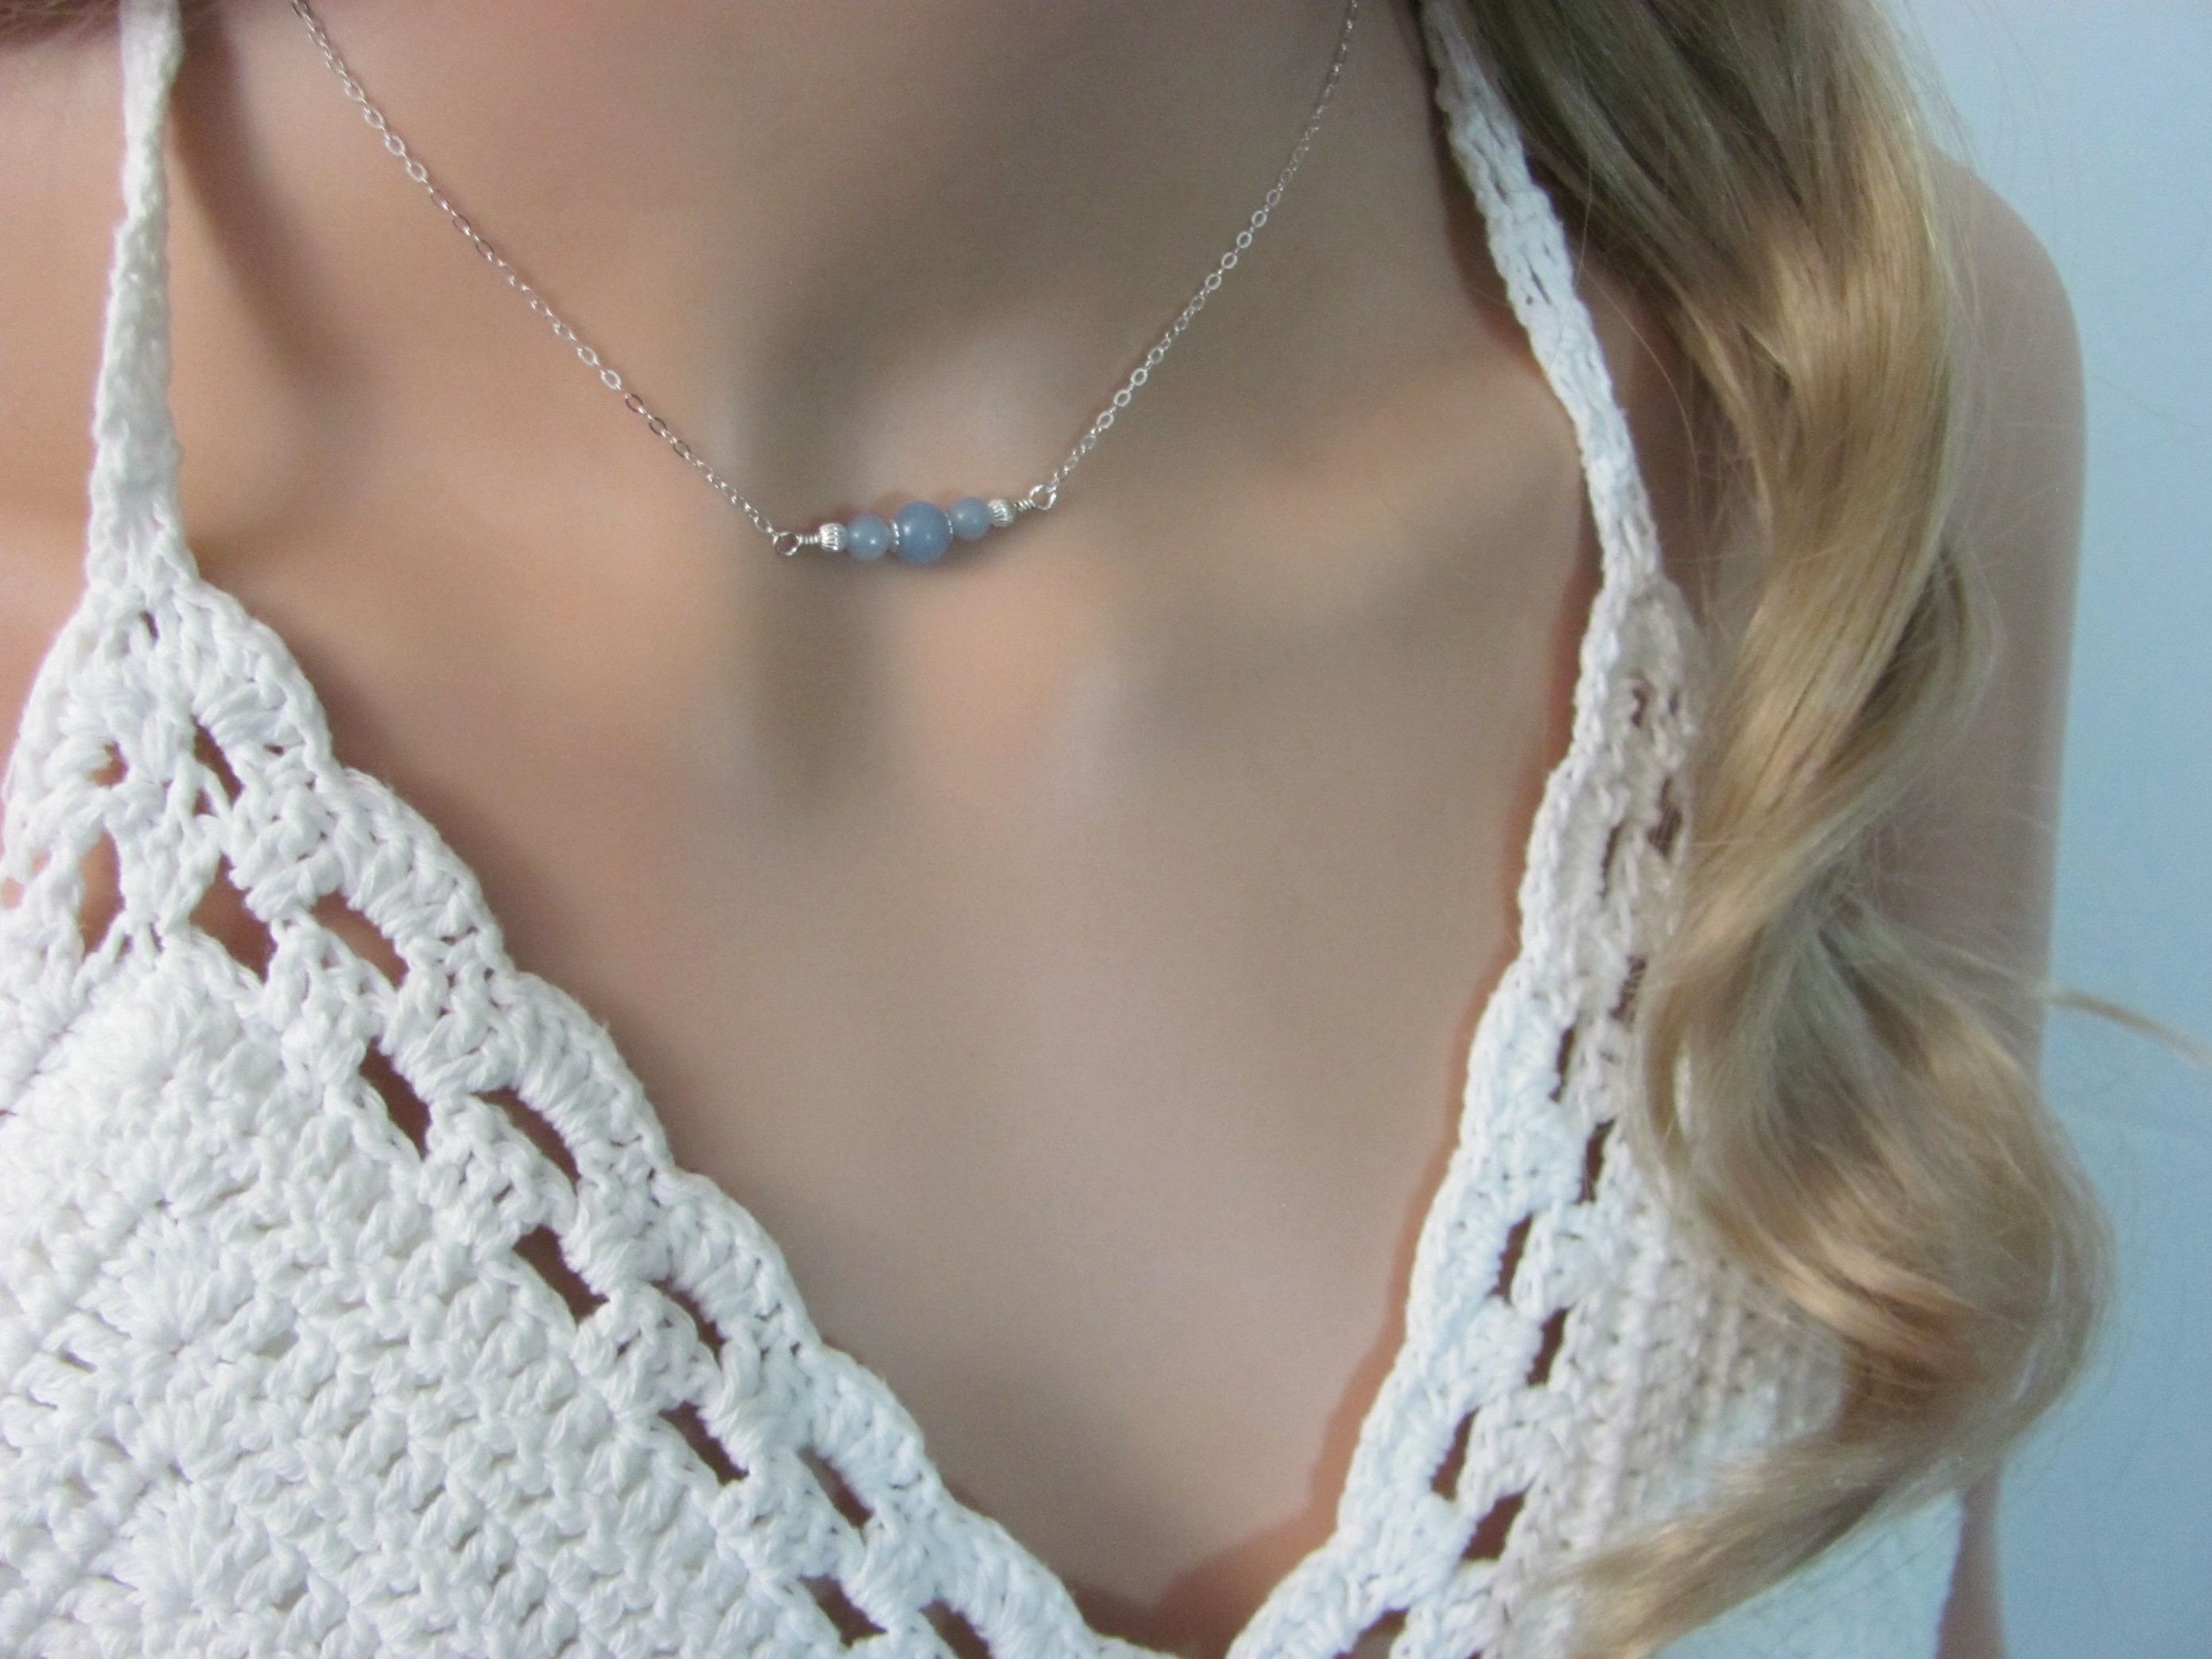 Angelite Necklace, Adjustable Gemstone Choker